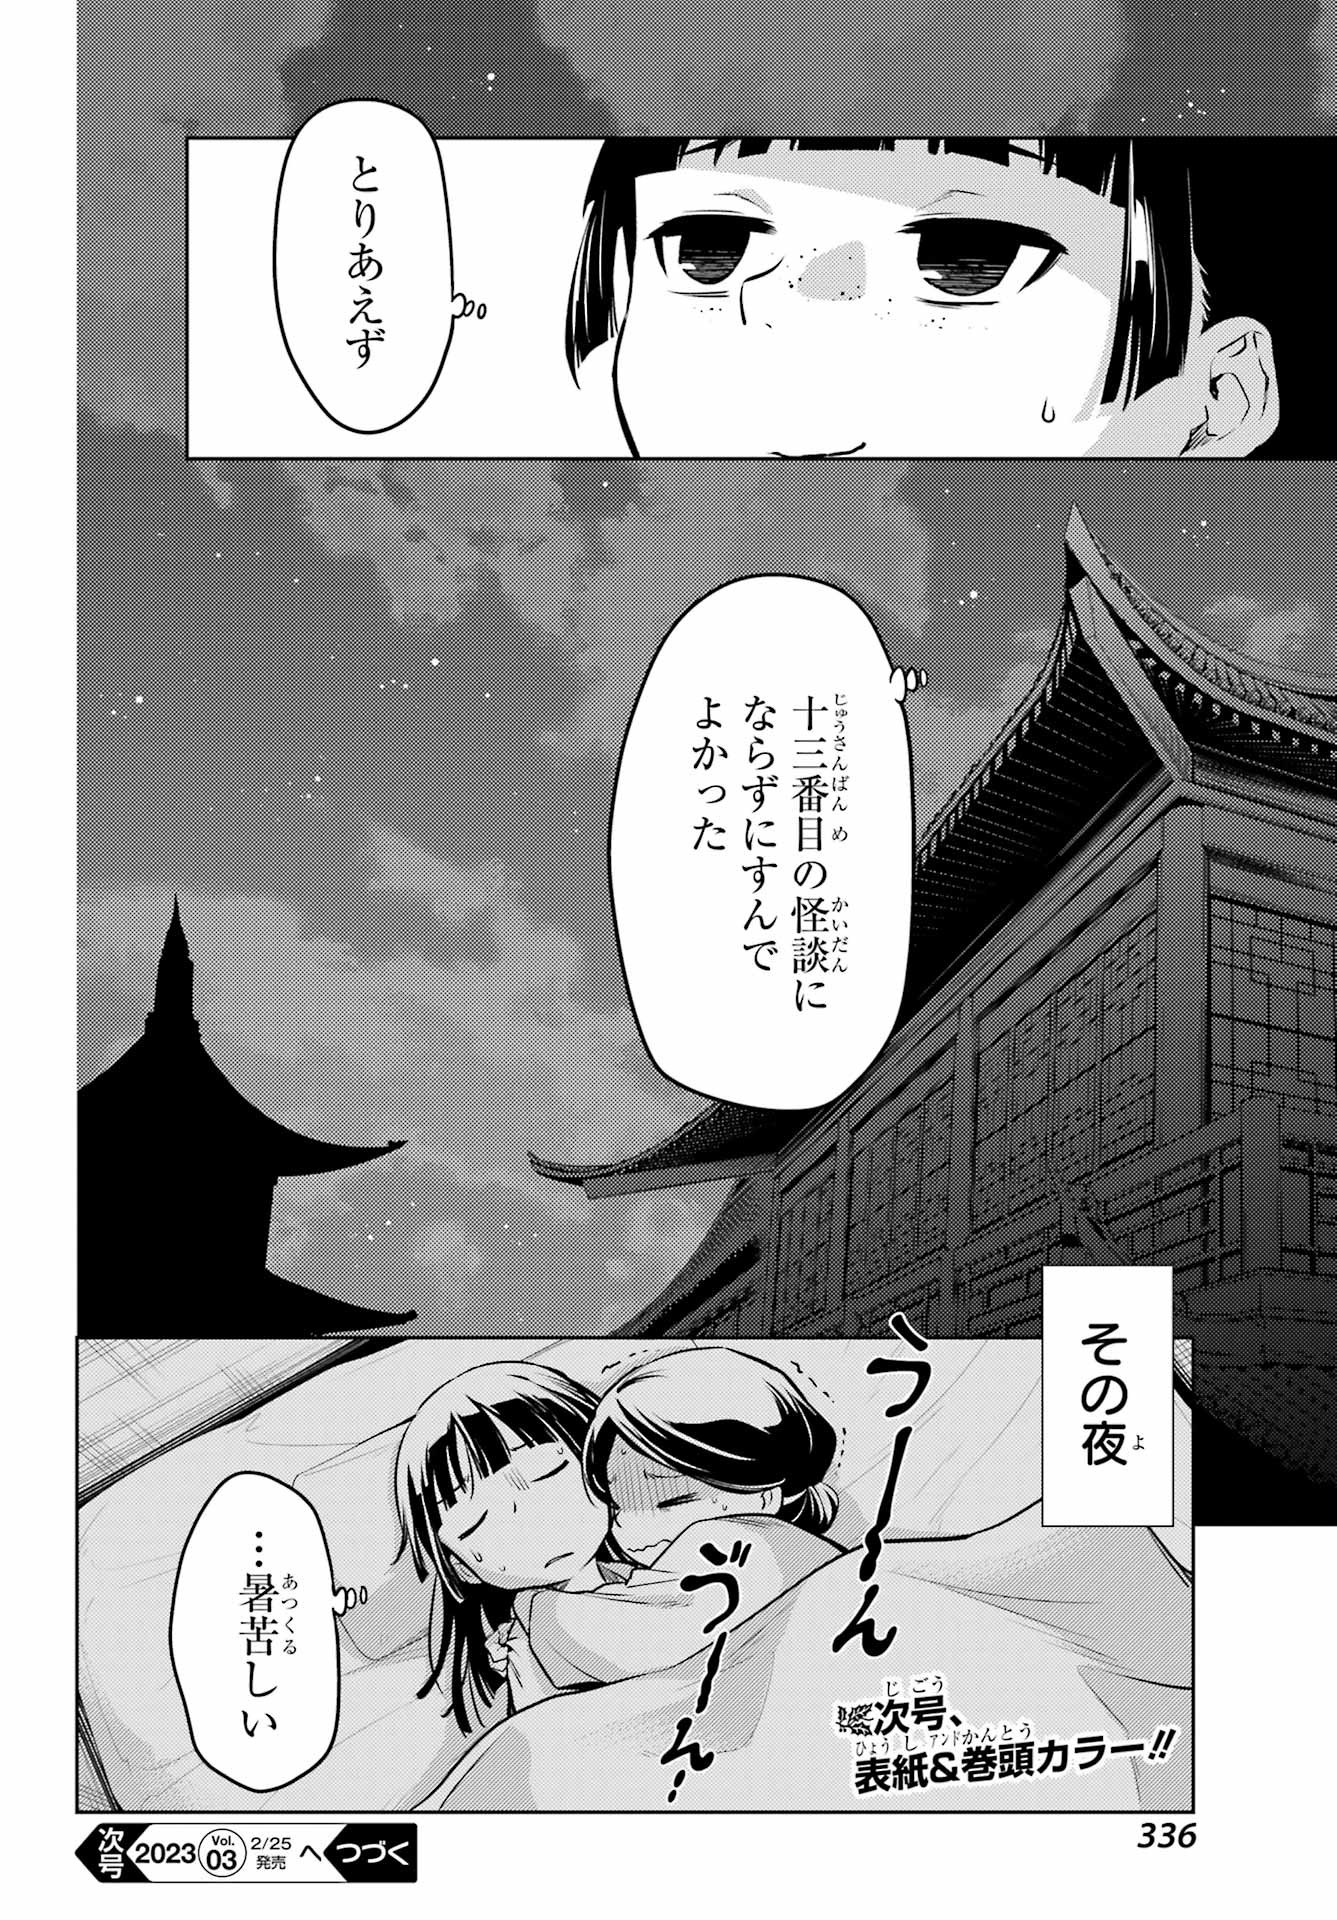 Kusuriya no Hitorigoto - Chapter 59-2 - Page 25